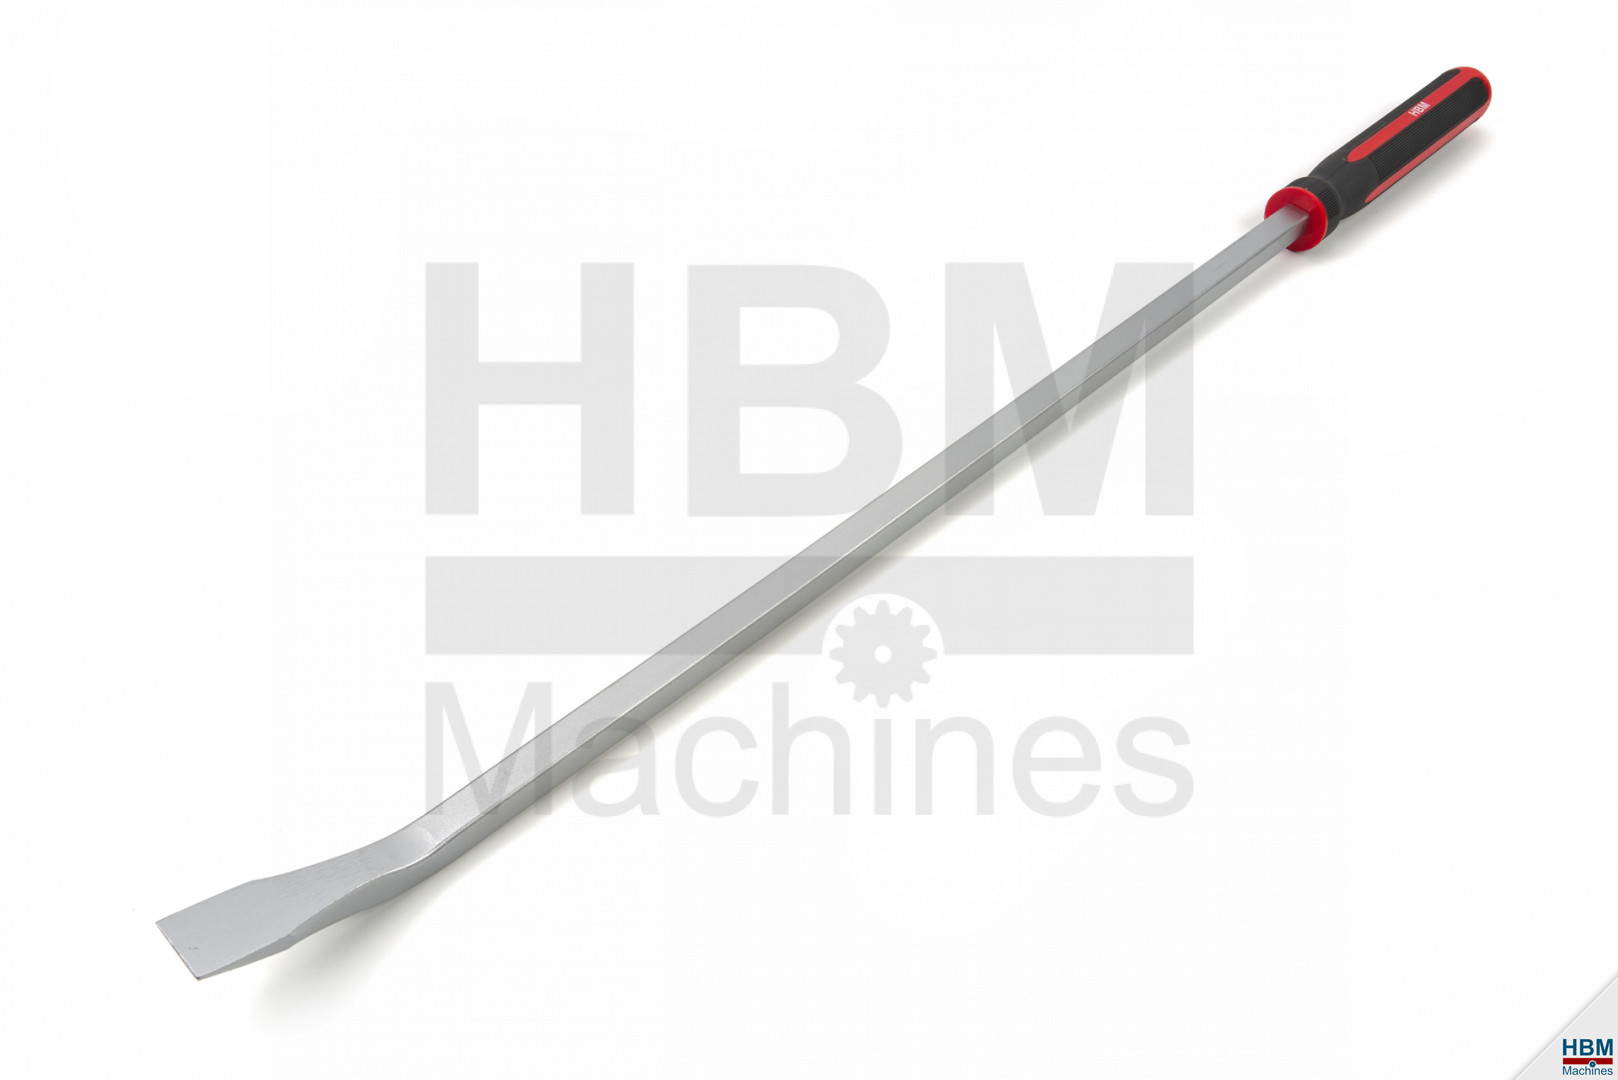 Sluiting Thriller blik HBM 900 mm. Professioneel Koevoet | HBM Machines